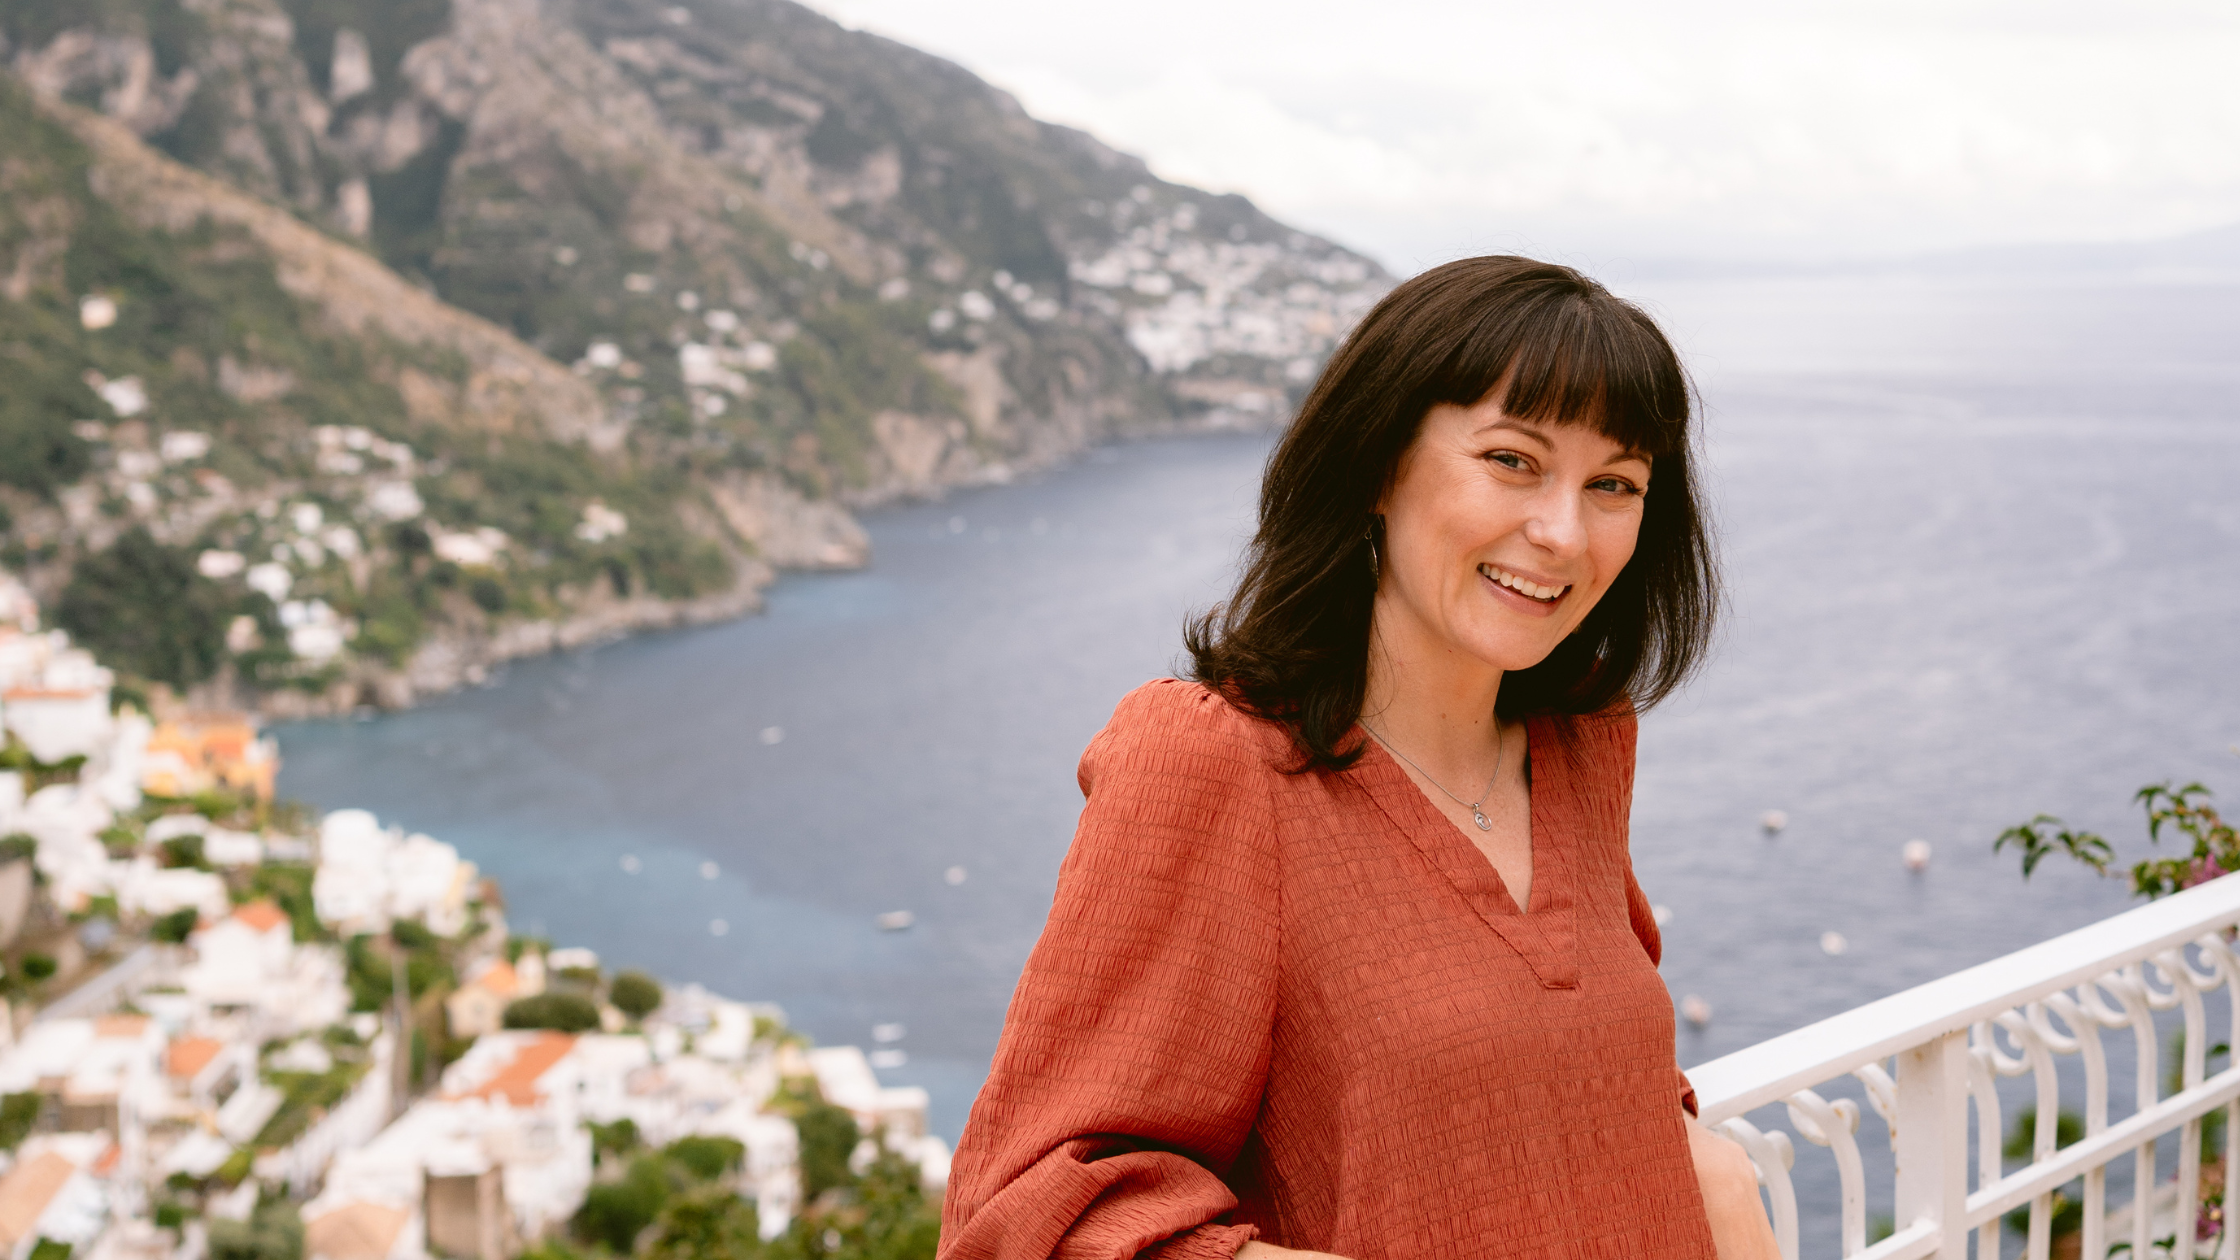 Erin Aquin in Positano, Italy smiling on a balcony